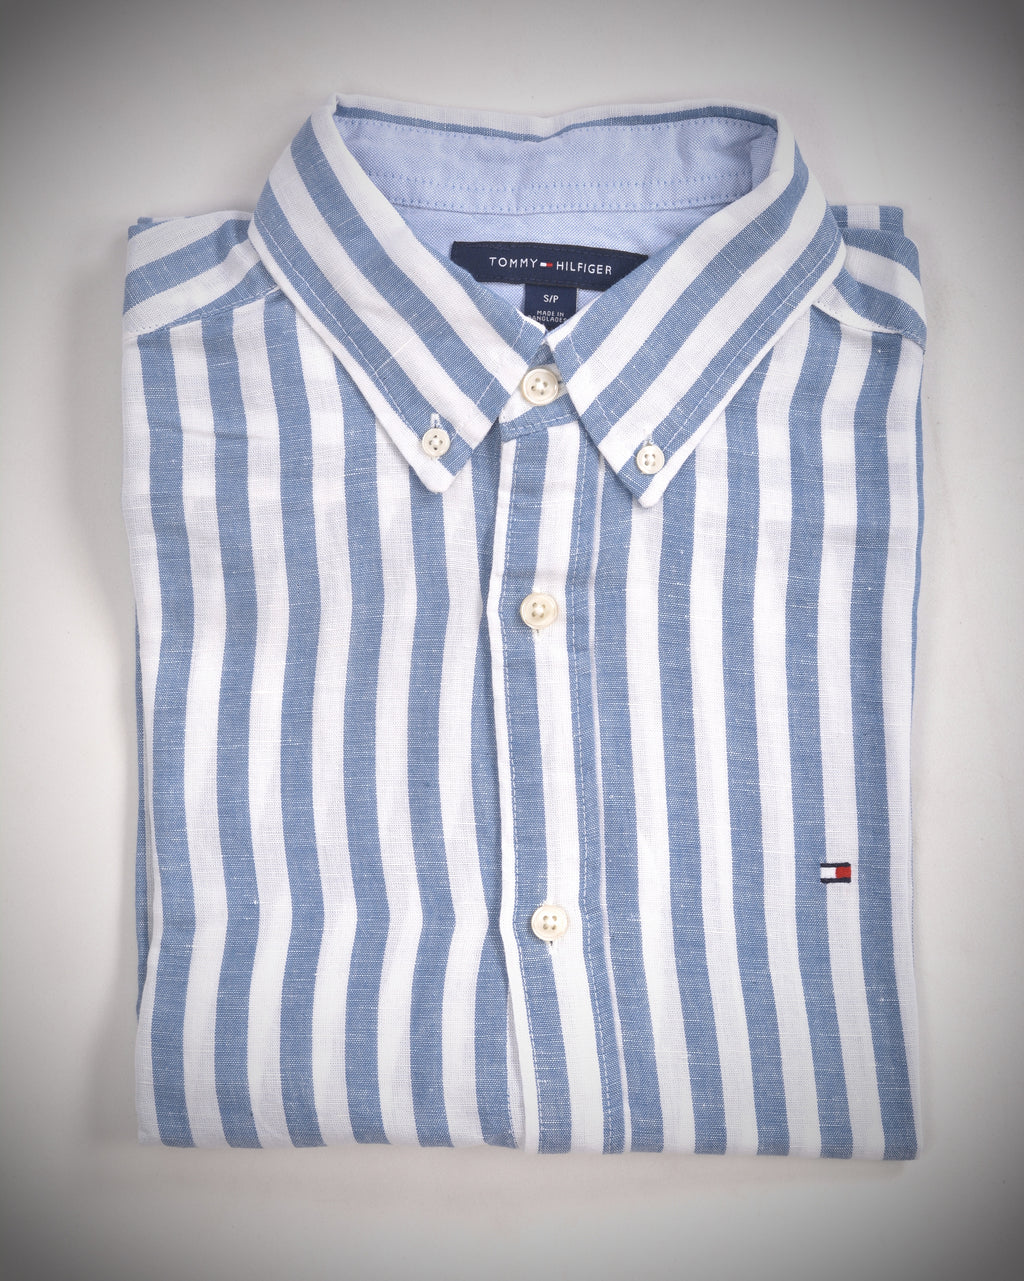 Tommy Hilfiger Wcc Textured Stripe Long Sleeve Shirt